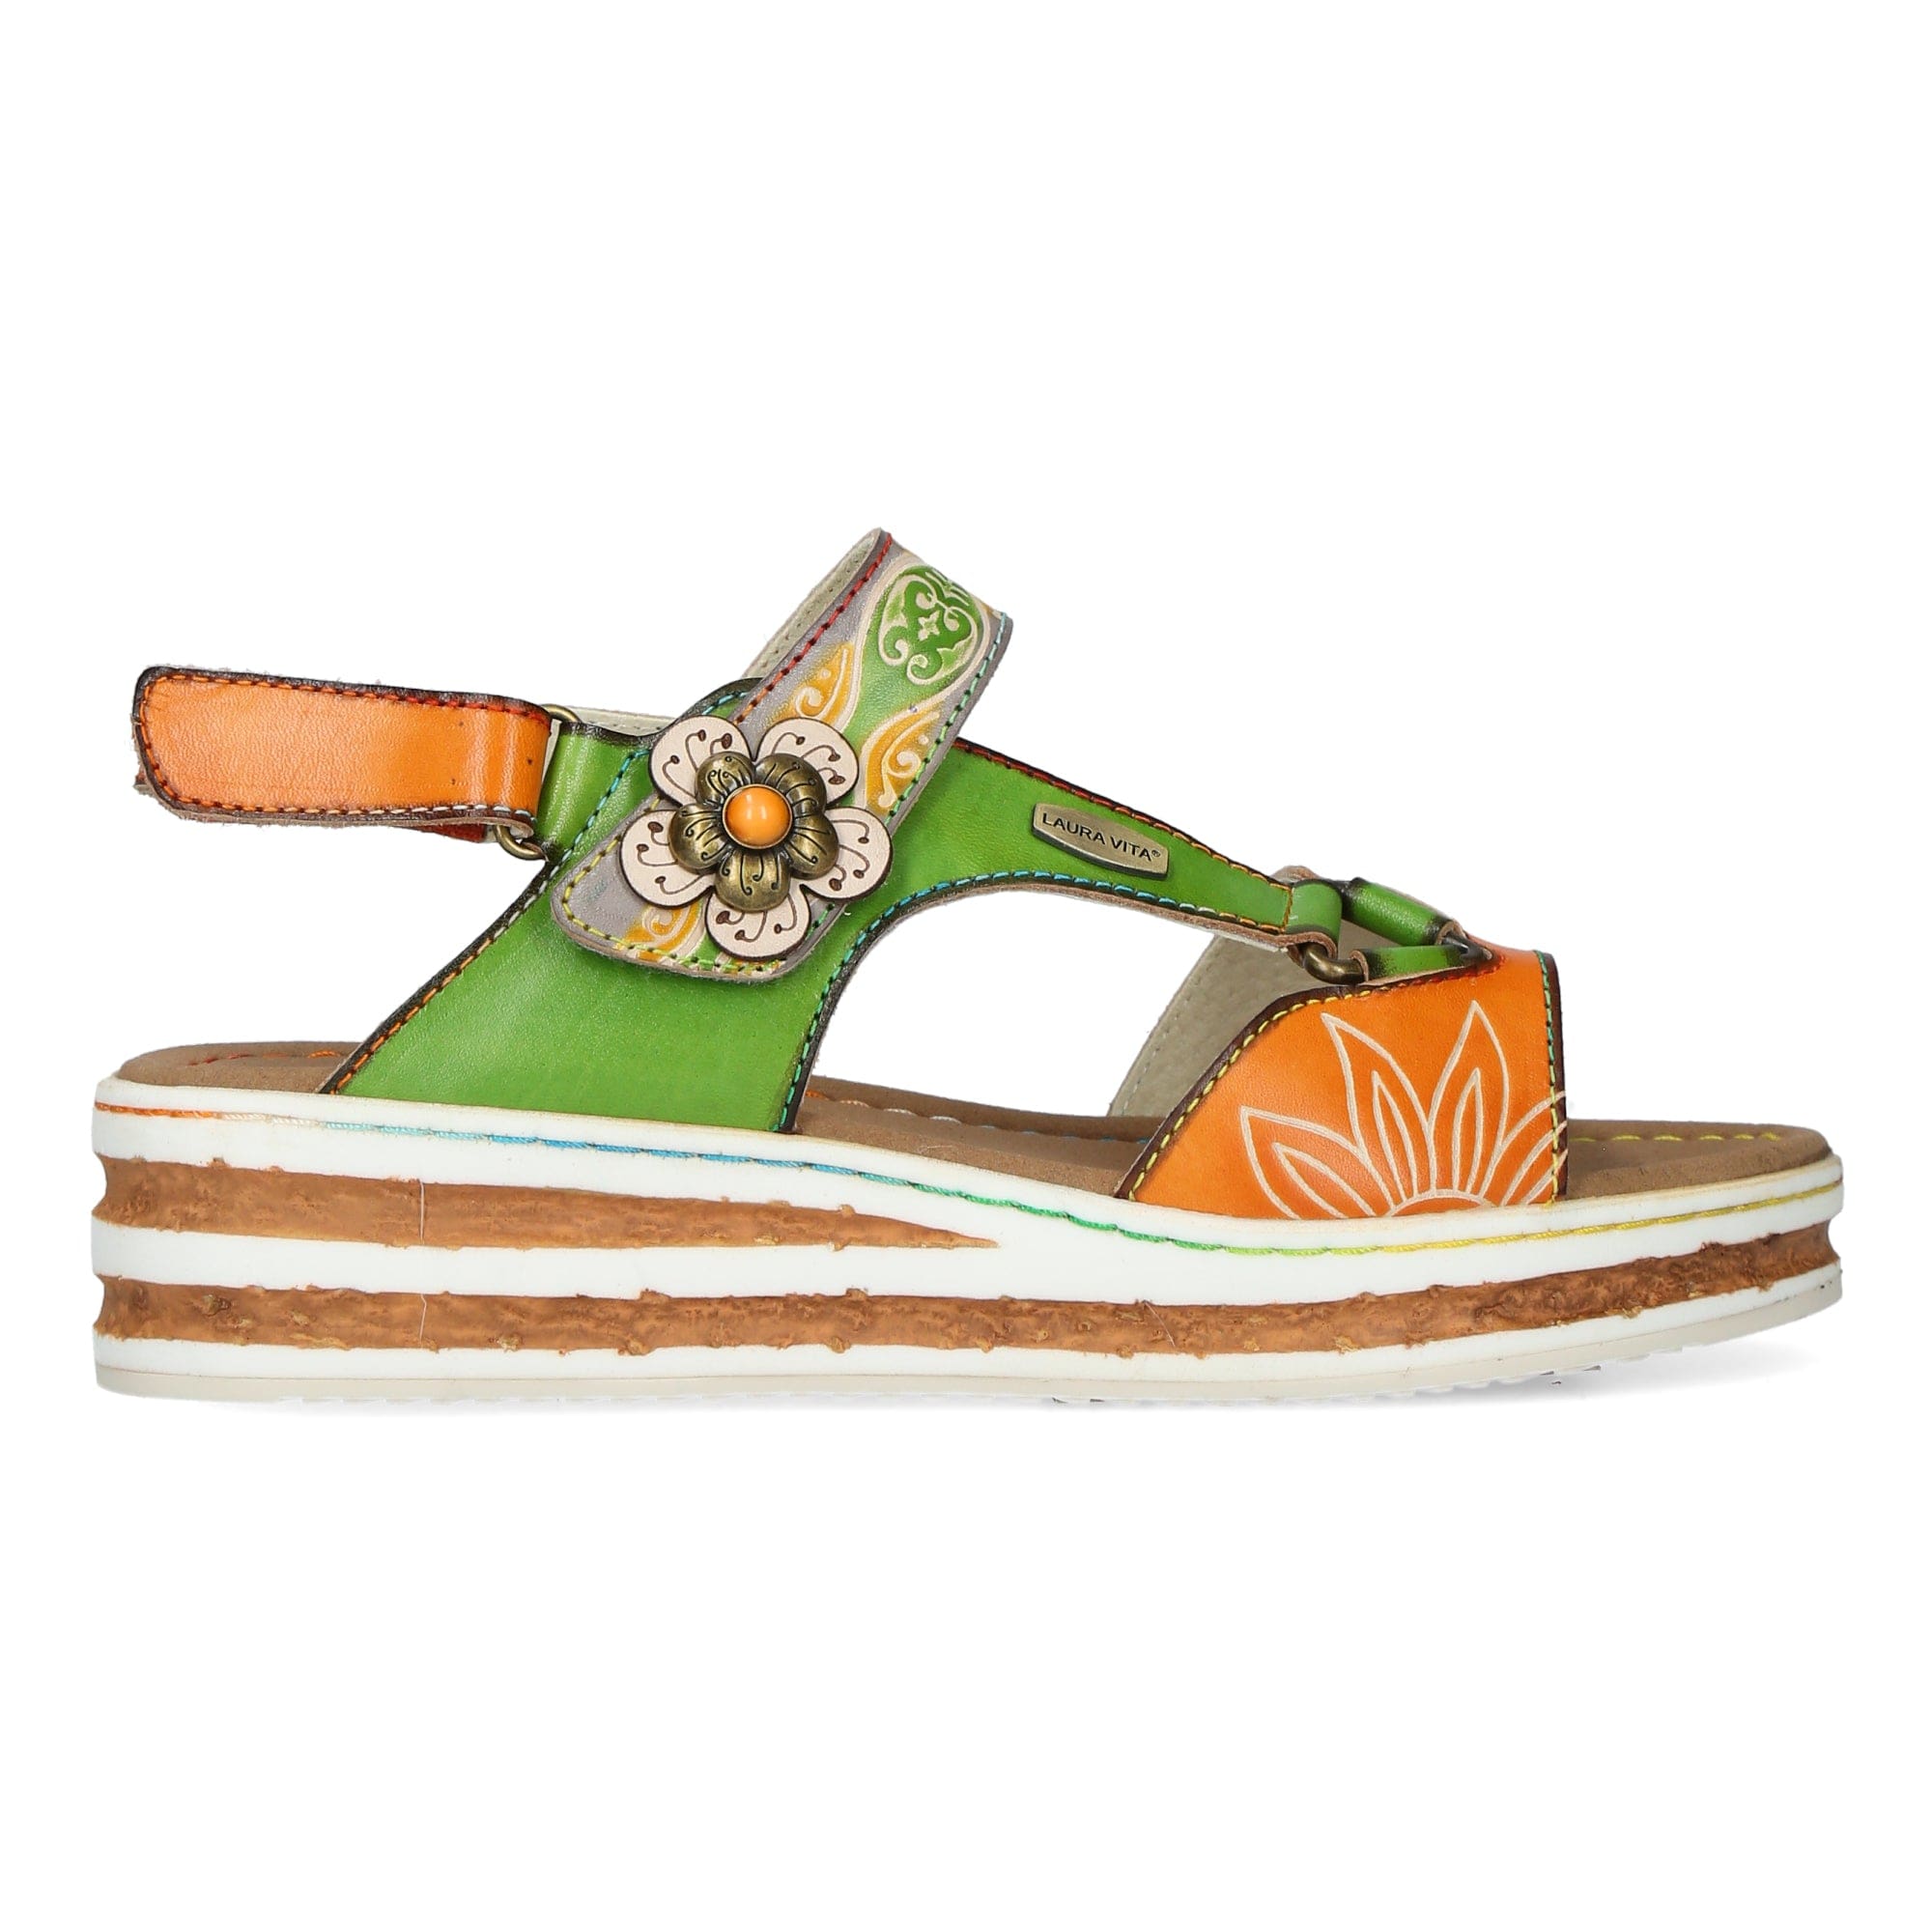 Shoe DICEZEO 0623 - 35 / Green - Sandal